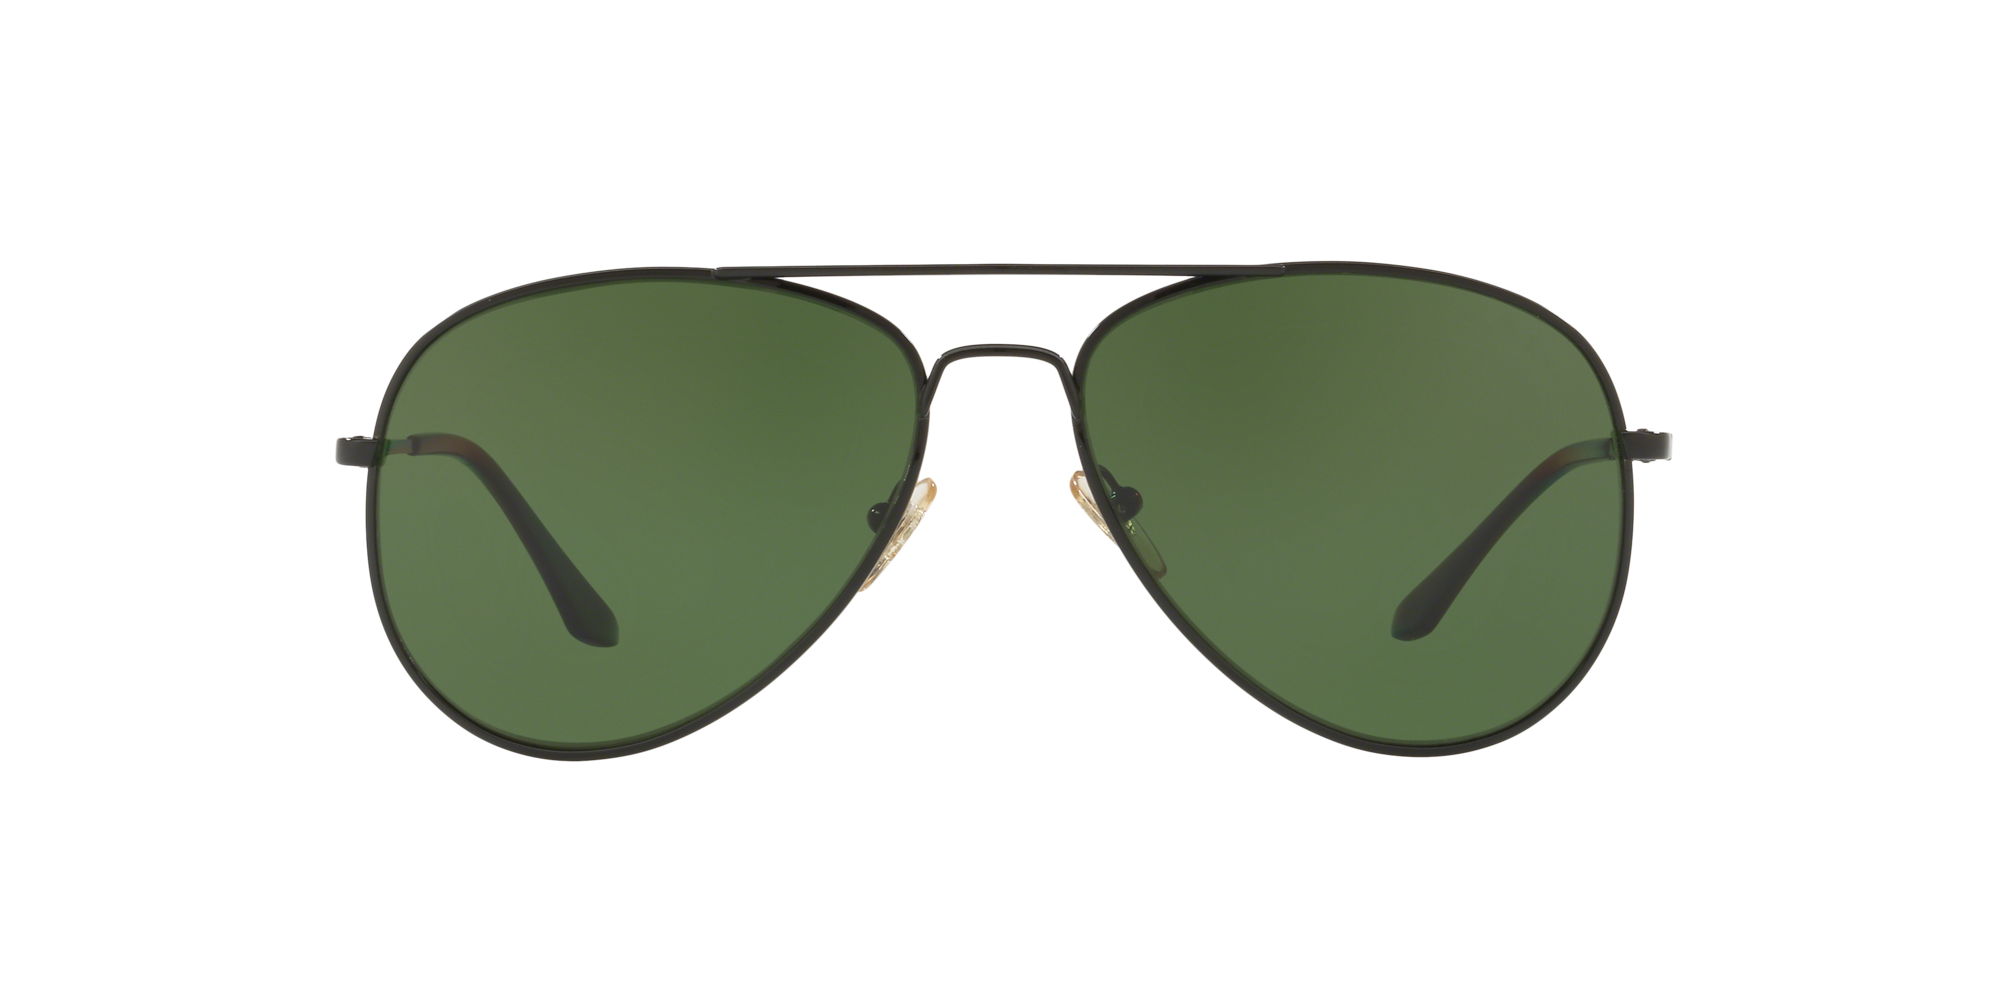 Sunglass Hut Collection HU1001 59 Polarized Green Classic G-15 & Black  Polarized Sunglasses